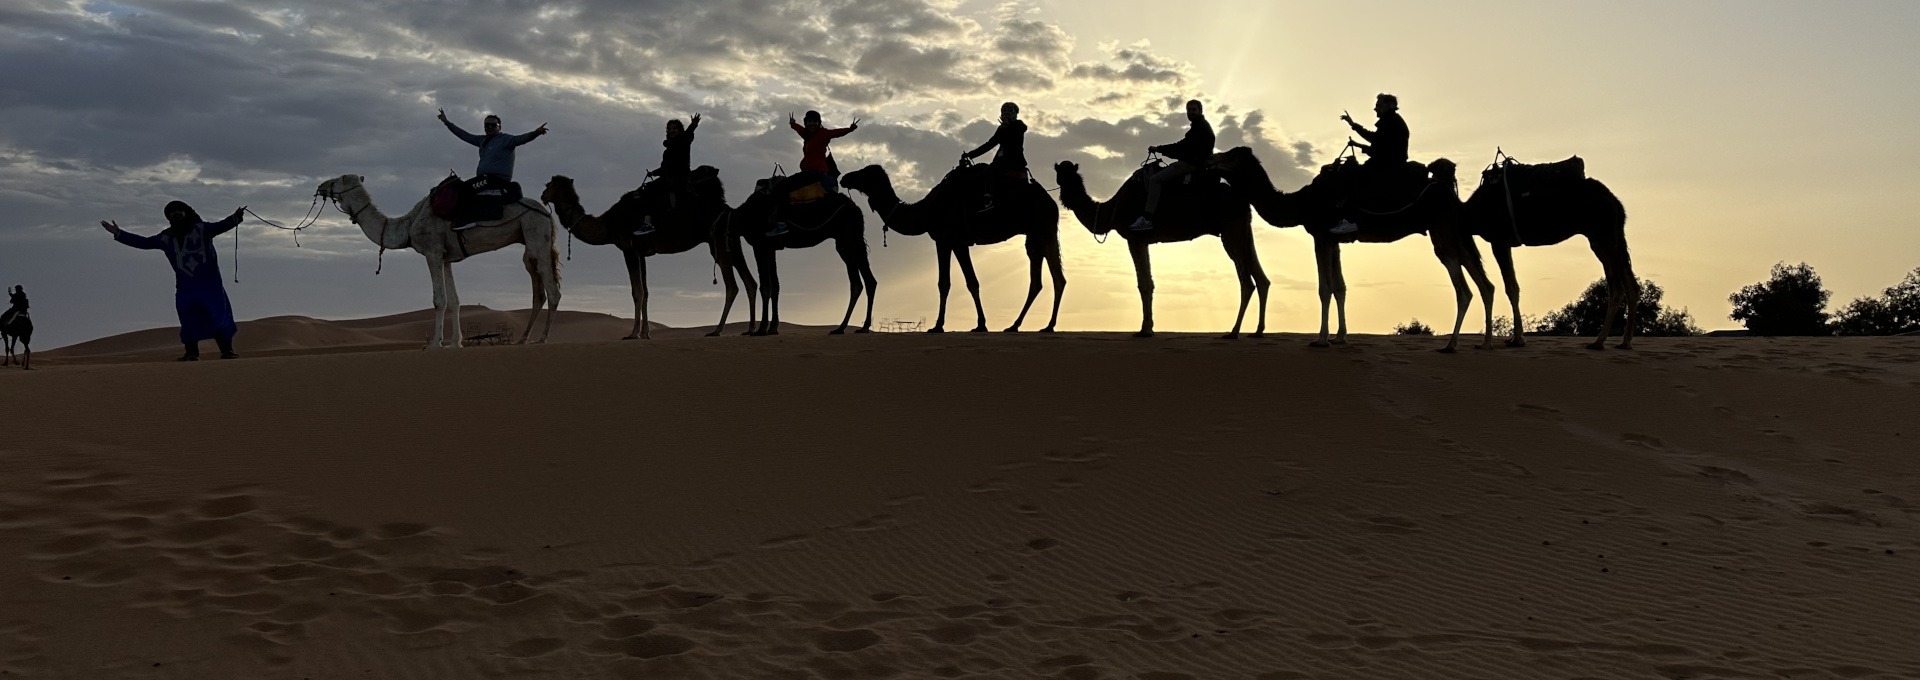 Camel-trekking Tours